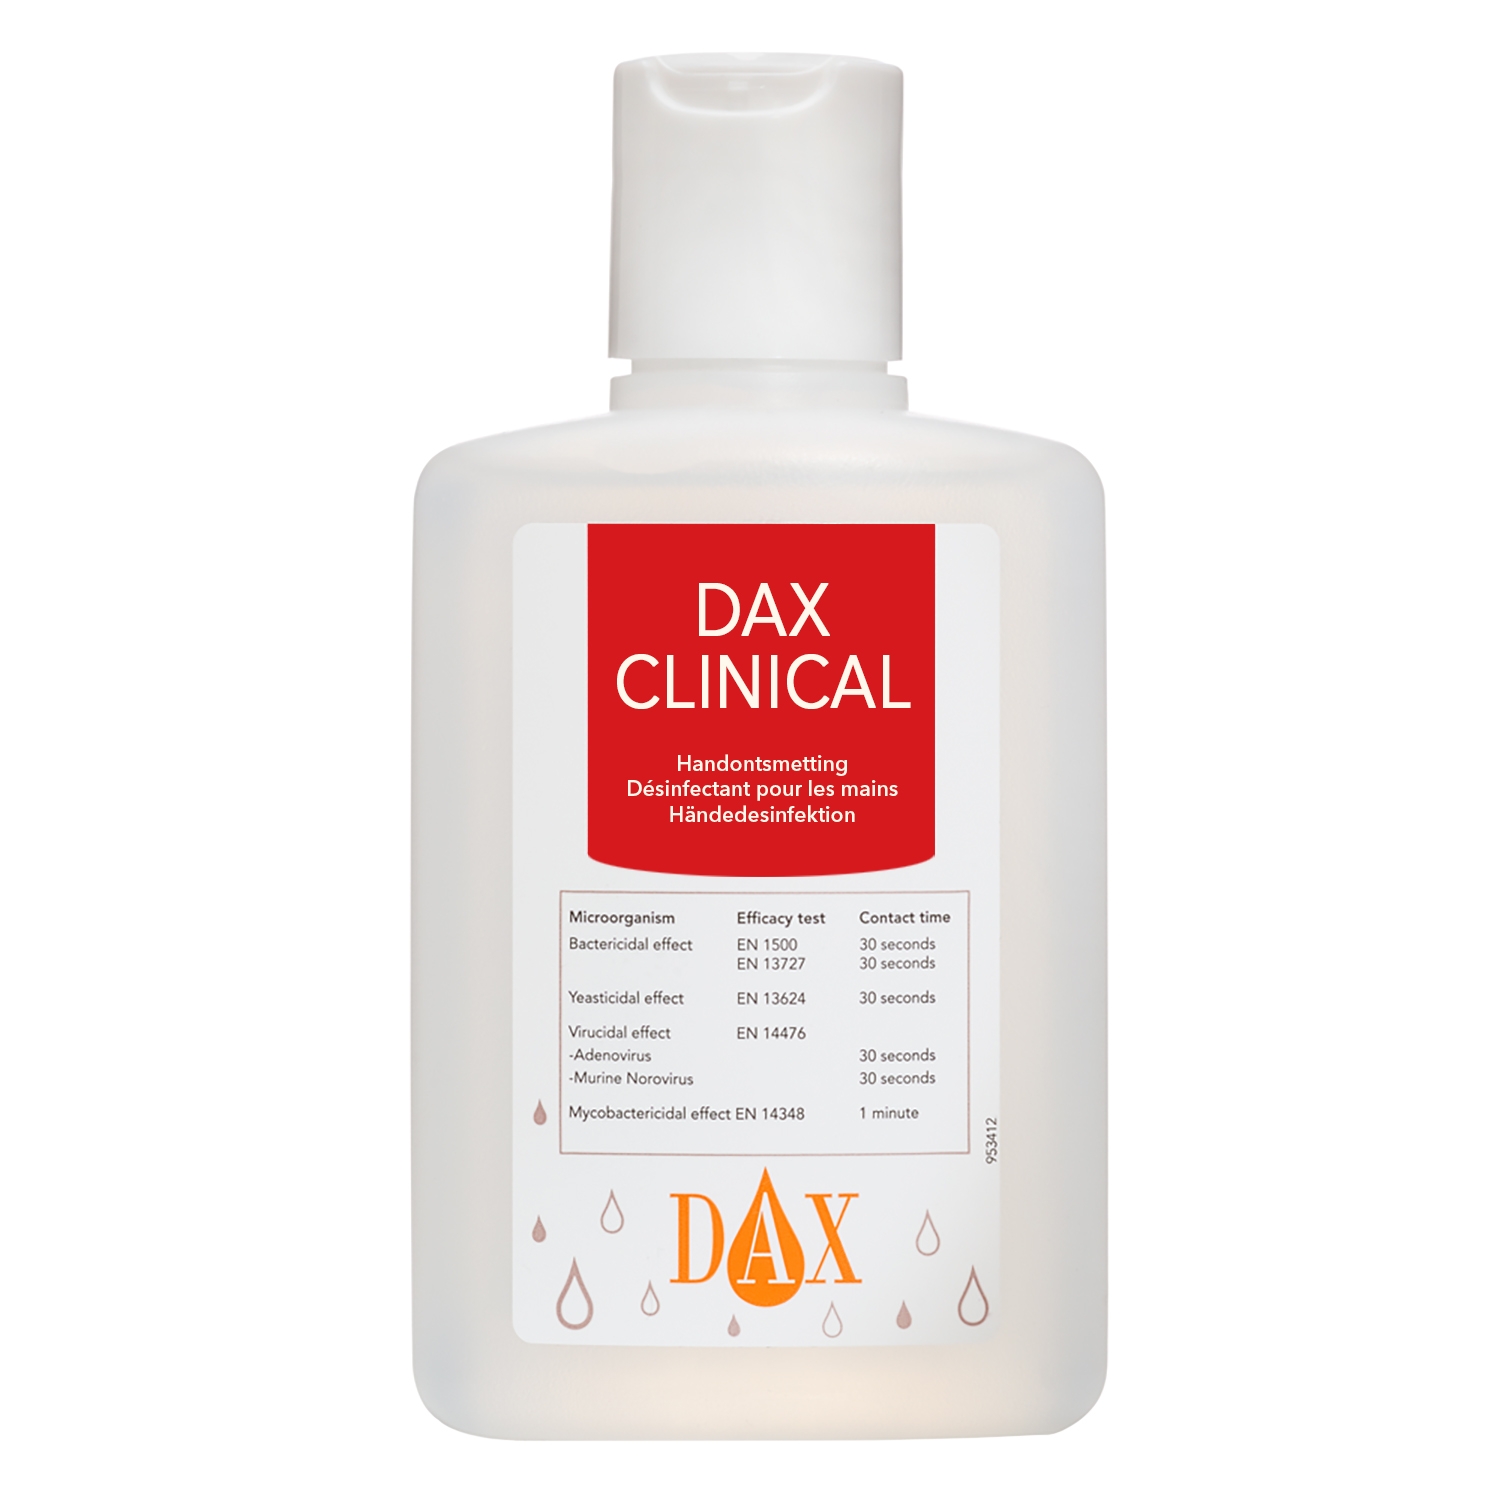 Dax Clinical handontsmetting 75% - 150 ml